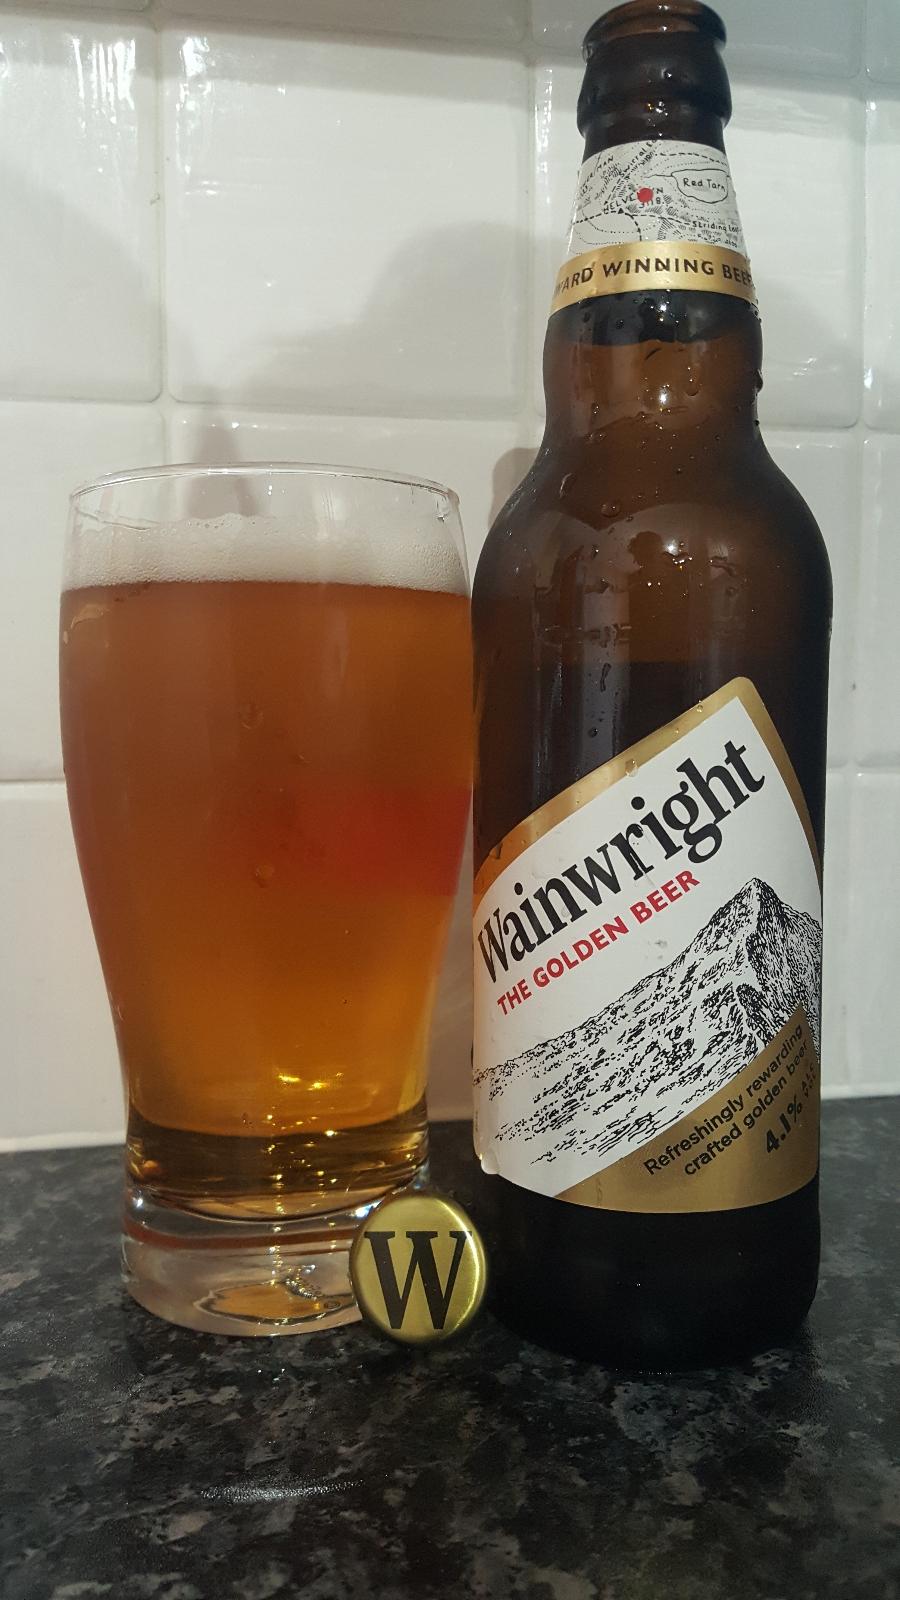 Wainwright The Golden Beer